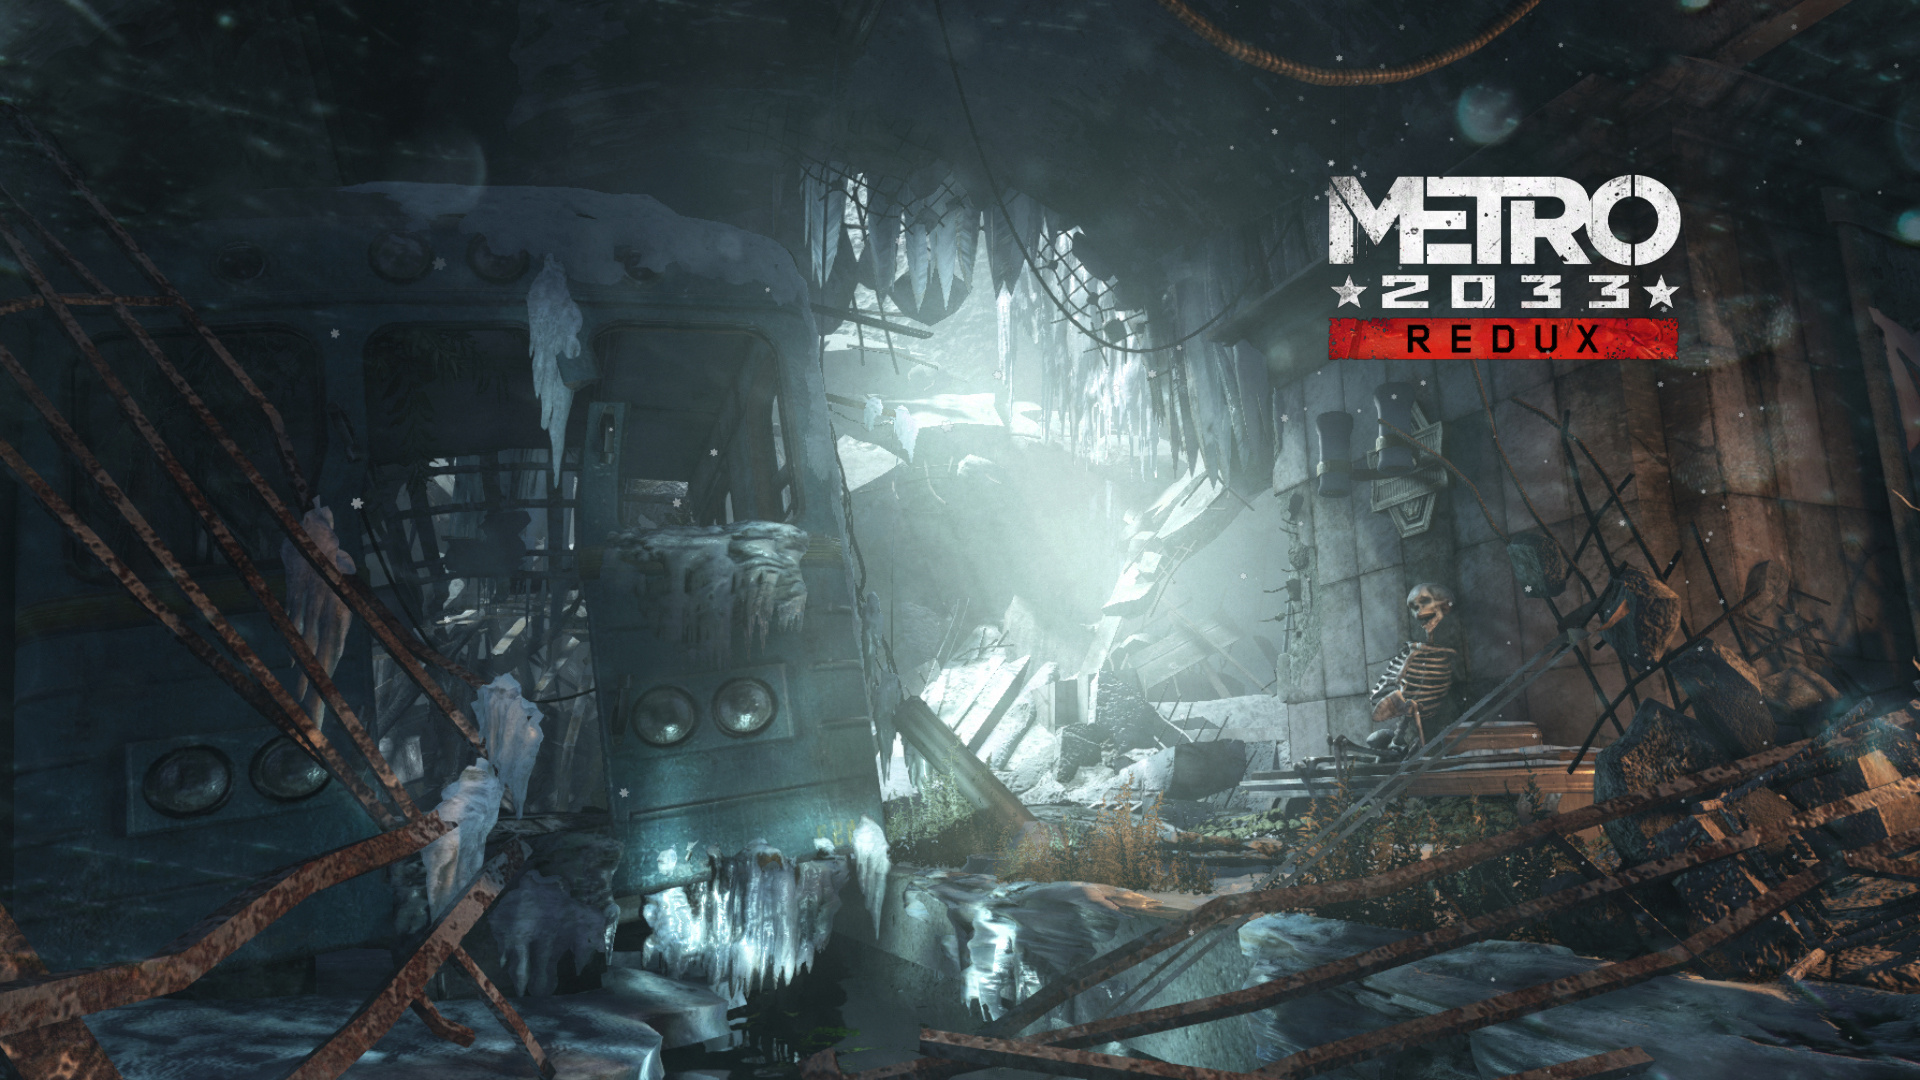 Metro: 2033 Redux, Ruined cityscape, Mutated creatures, Atmospheric setting, 1920x1080 Full HD Desktop